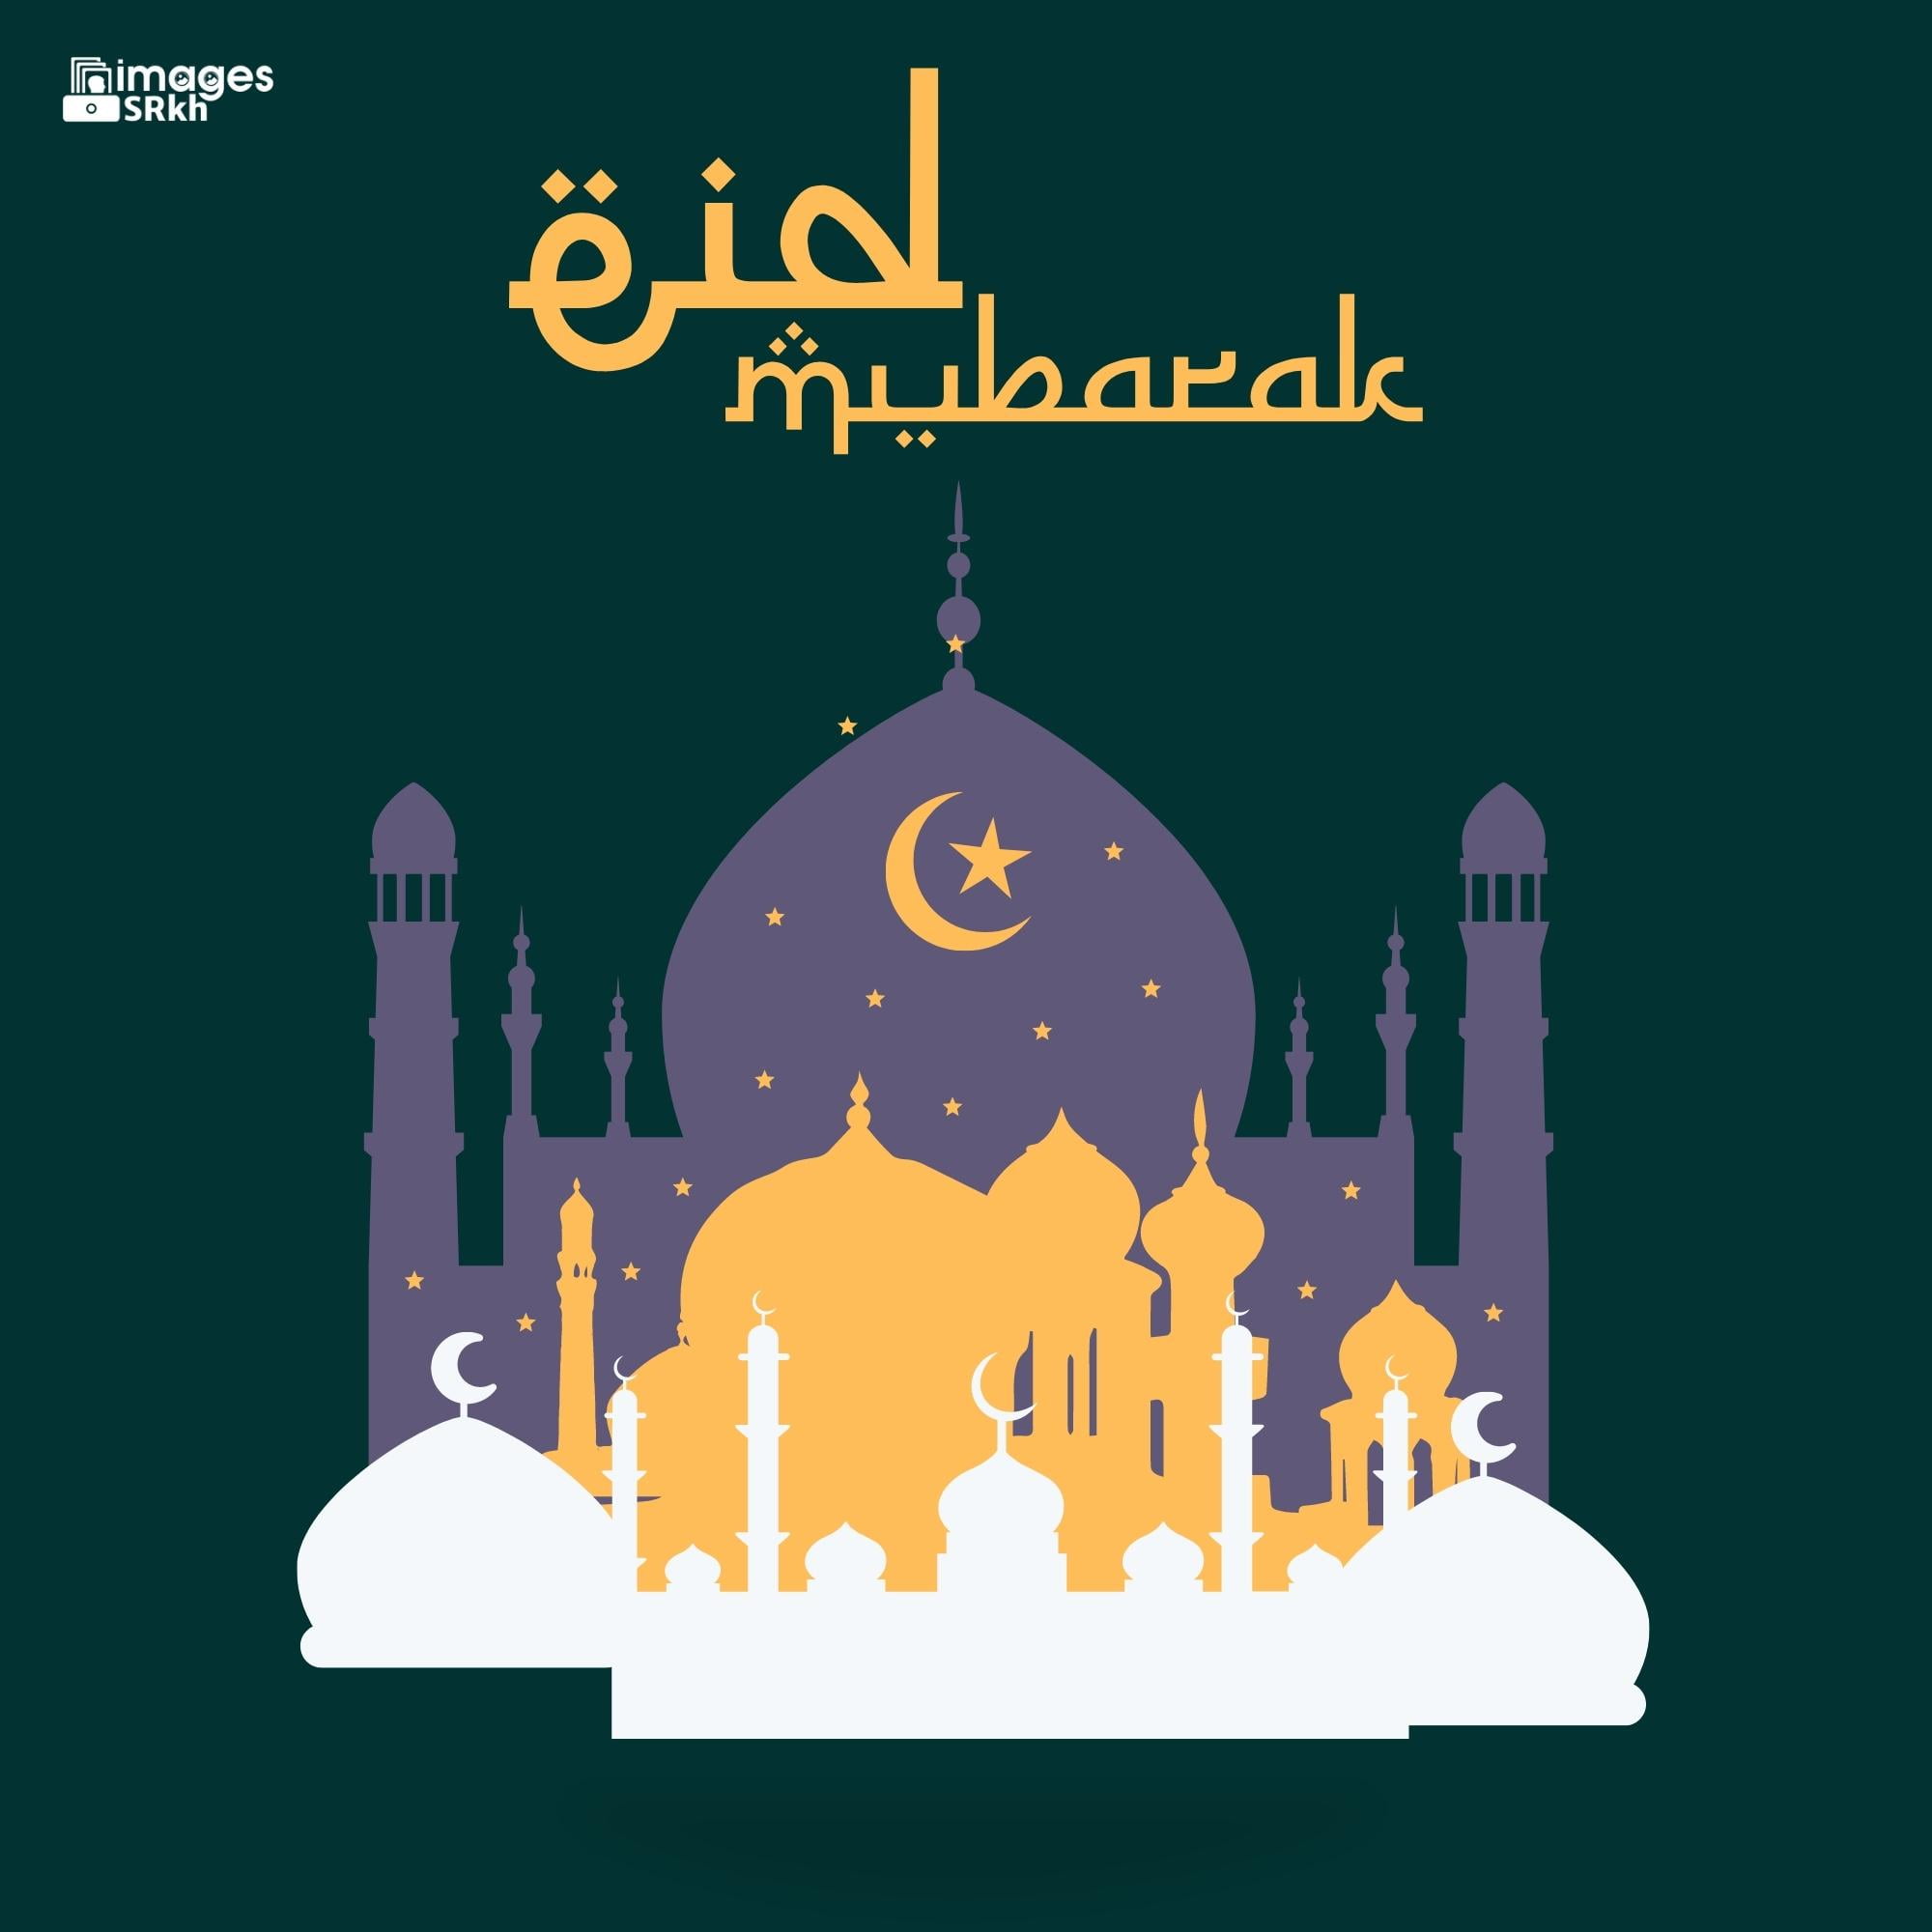 Happy Eid Mubarak (2) | Download free in Hd Quality | imagesSRkh